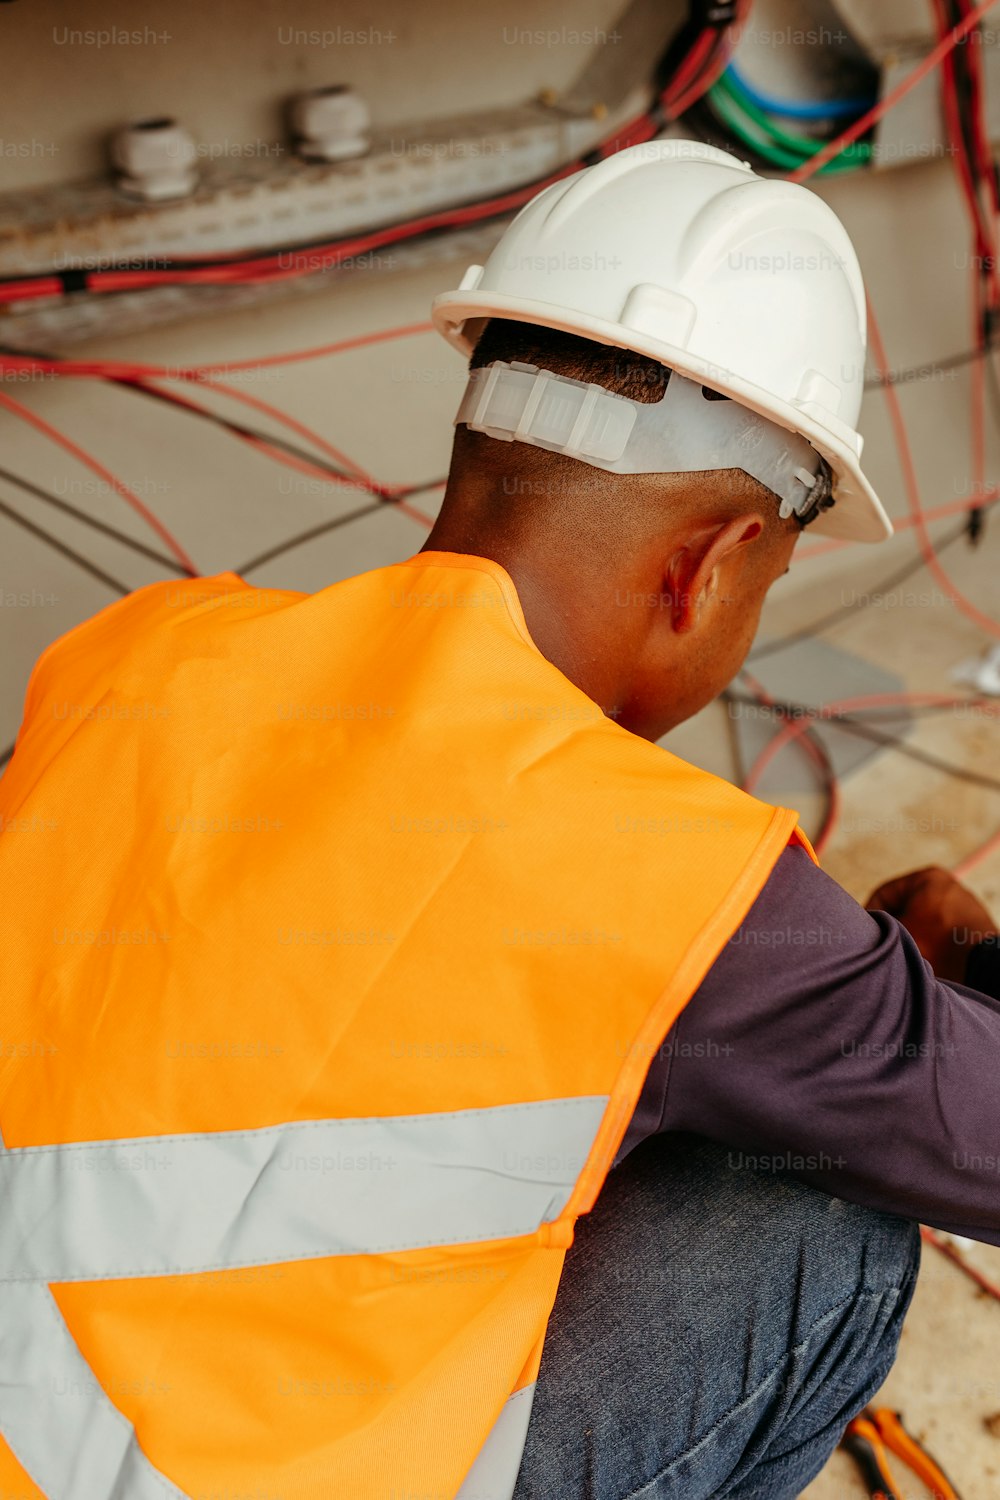 a man in an orange safety vest working on wires